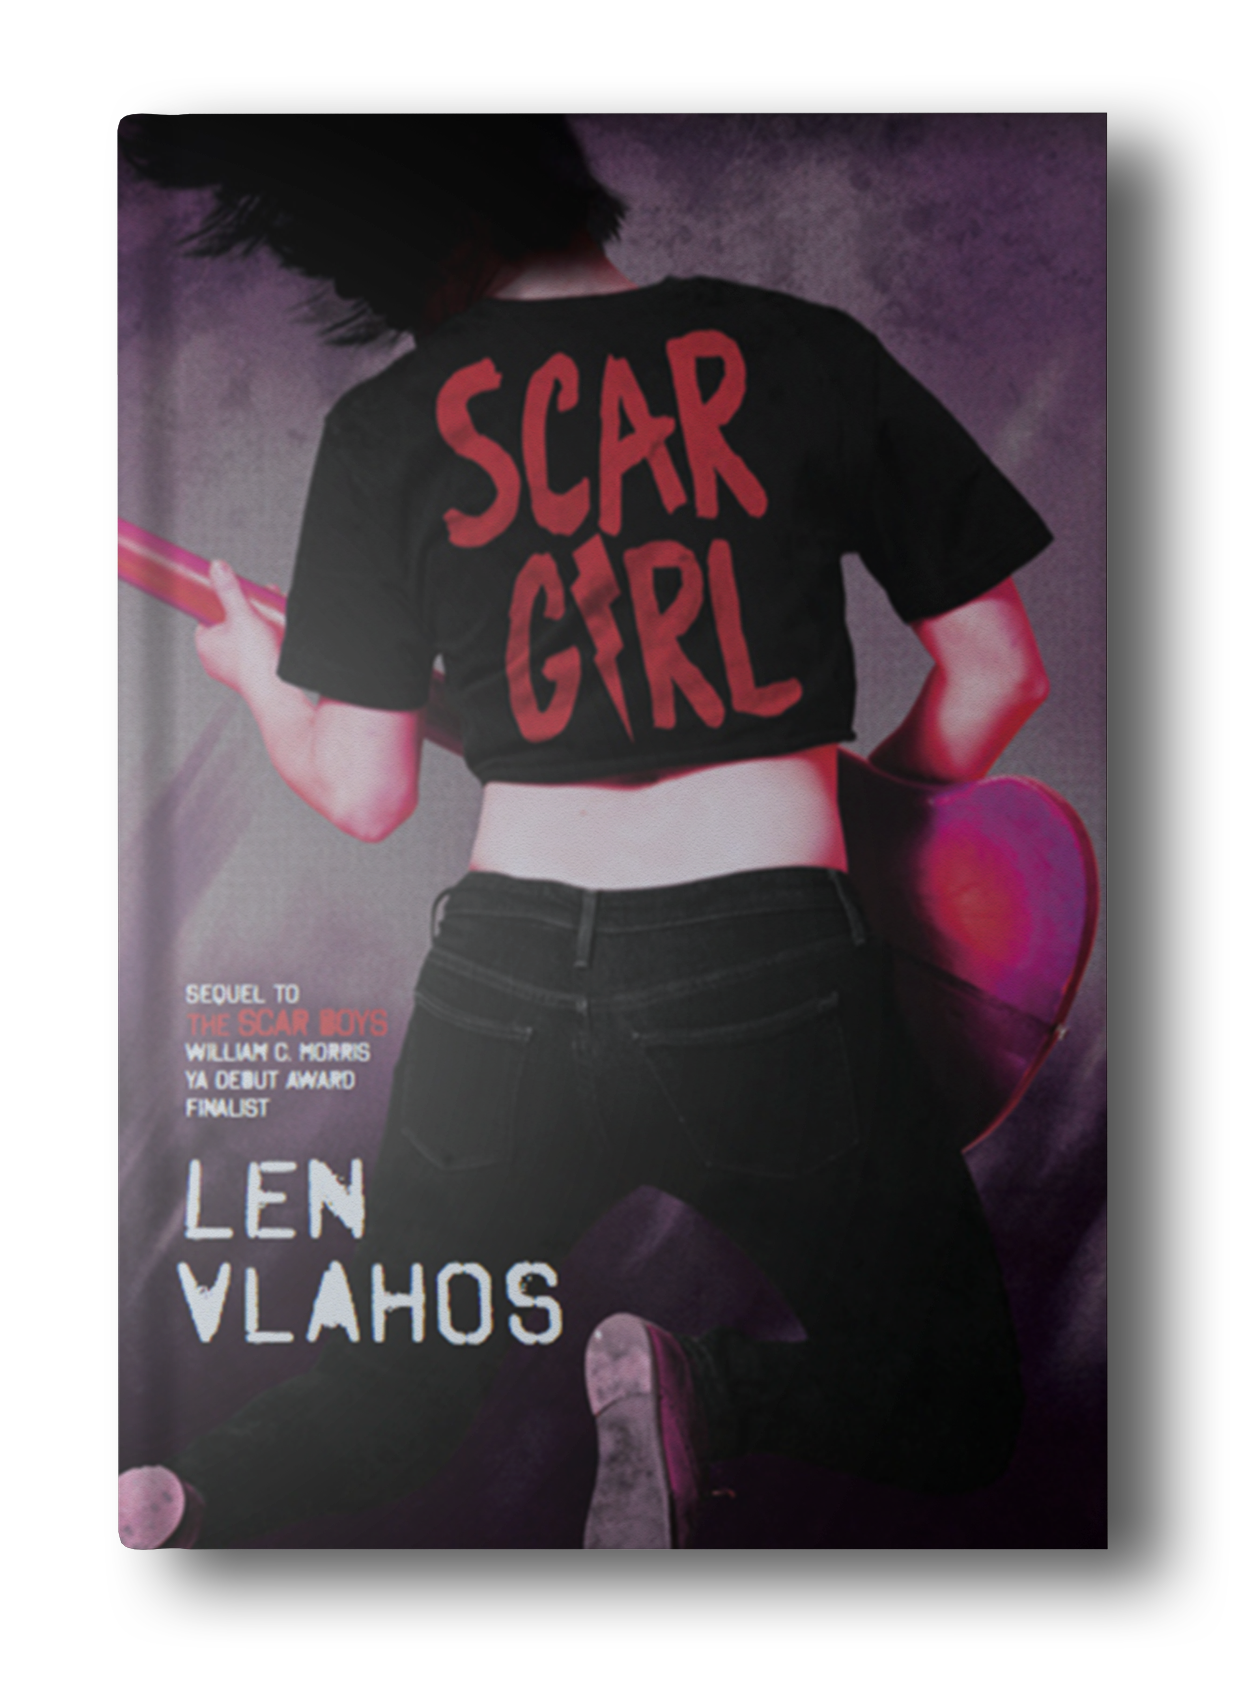 The Scar Boys by Len Vlahos